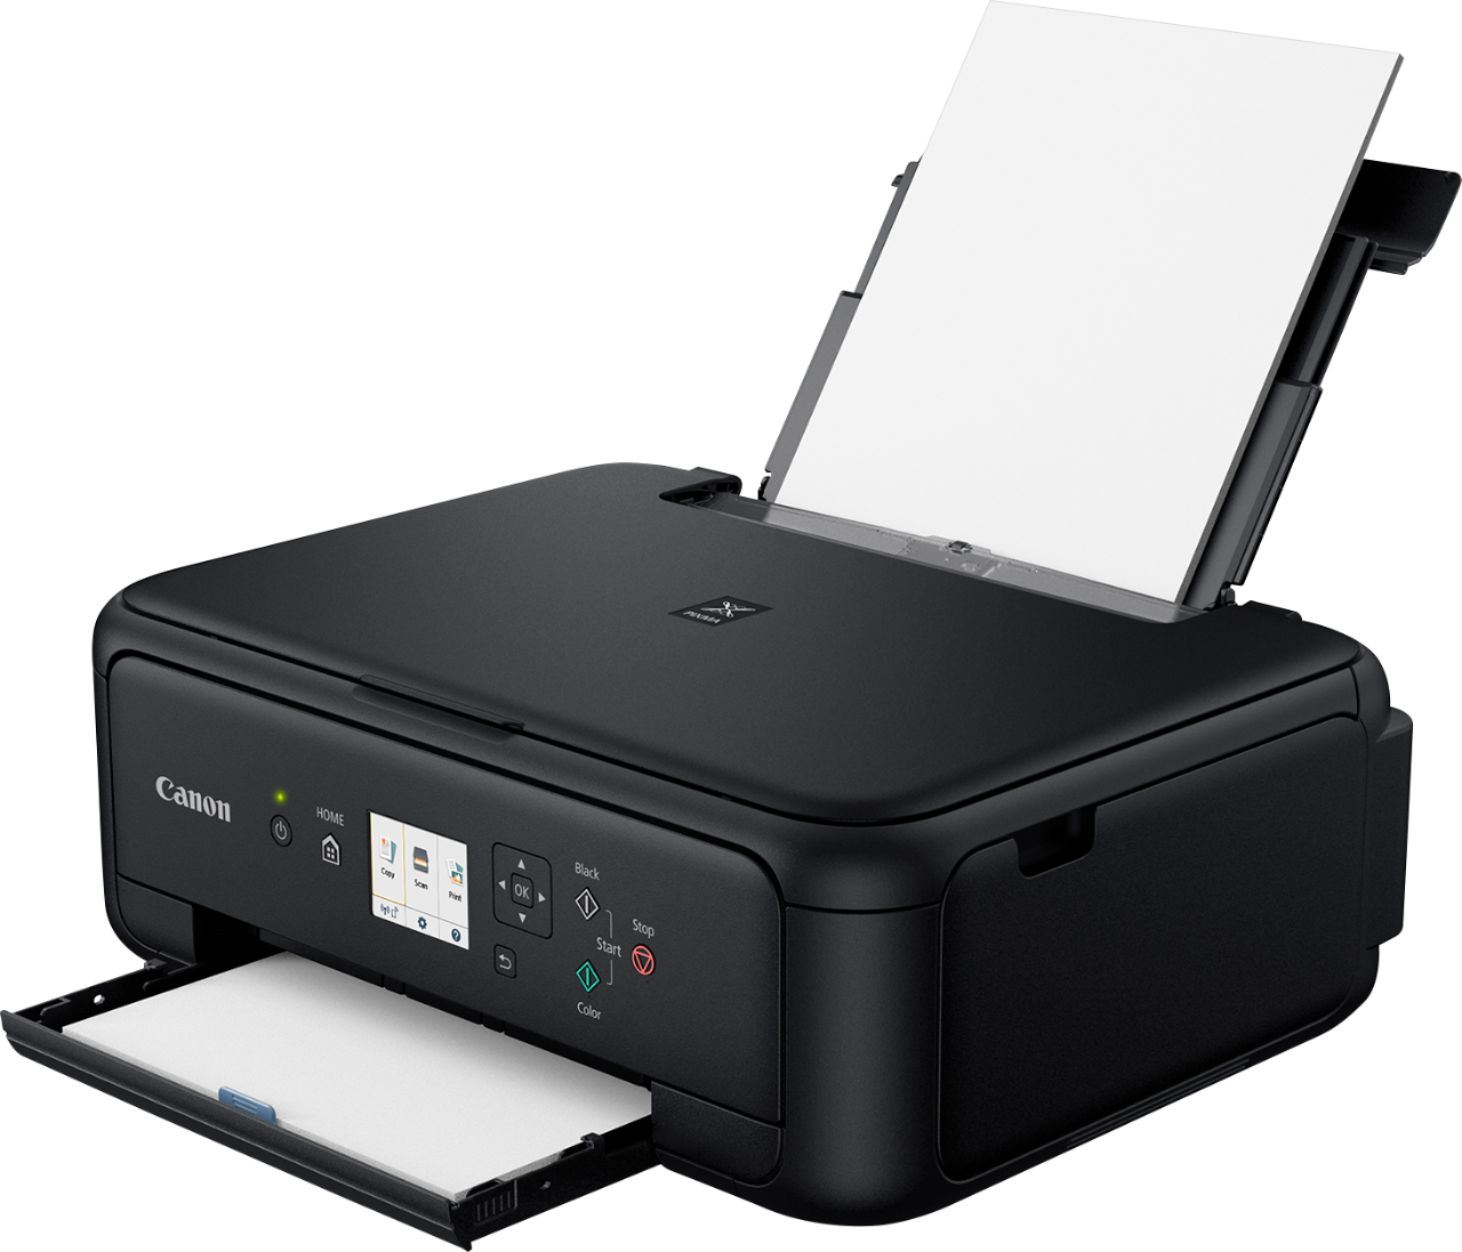 Multifunction Printer Canon Pixma TS5150 13 ipm WiFi Black